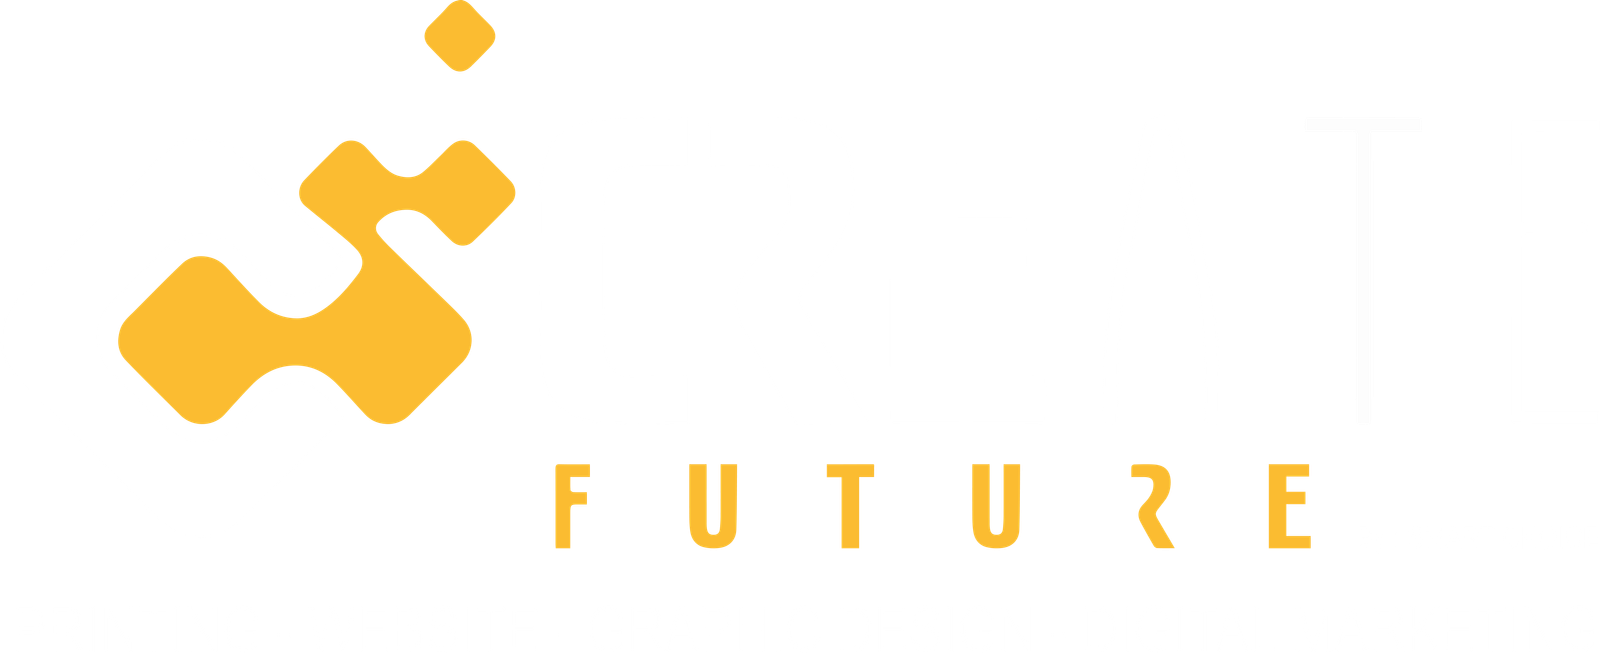 Create Future for Printing